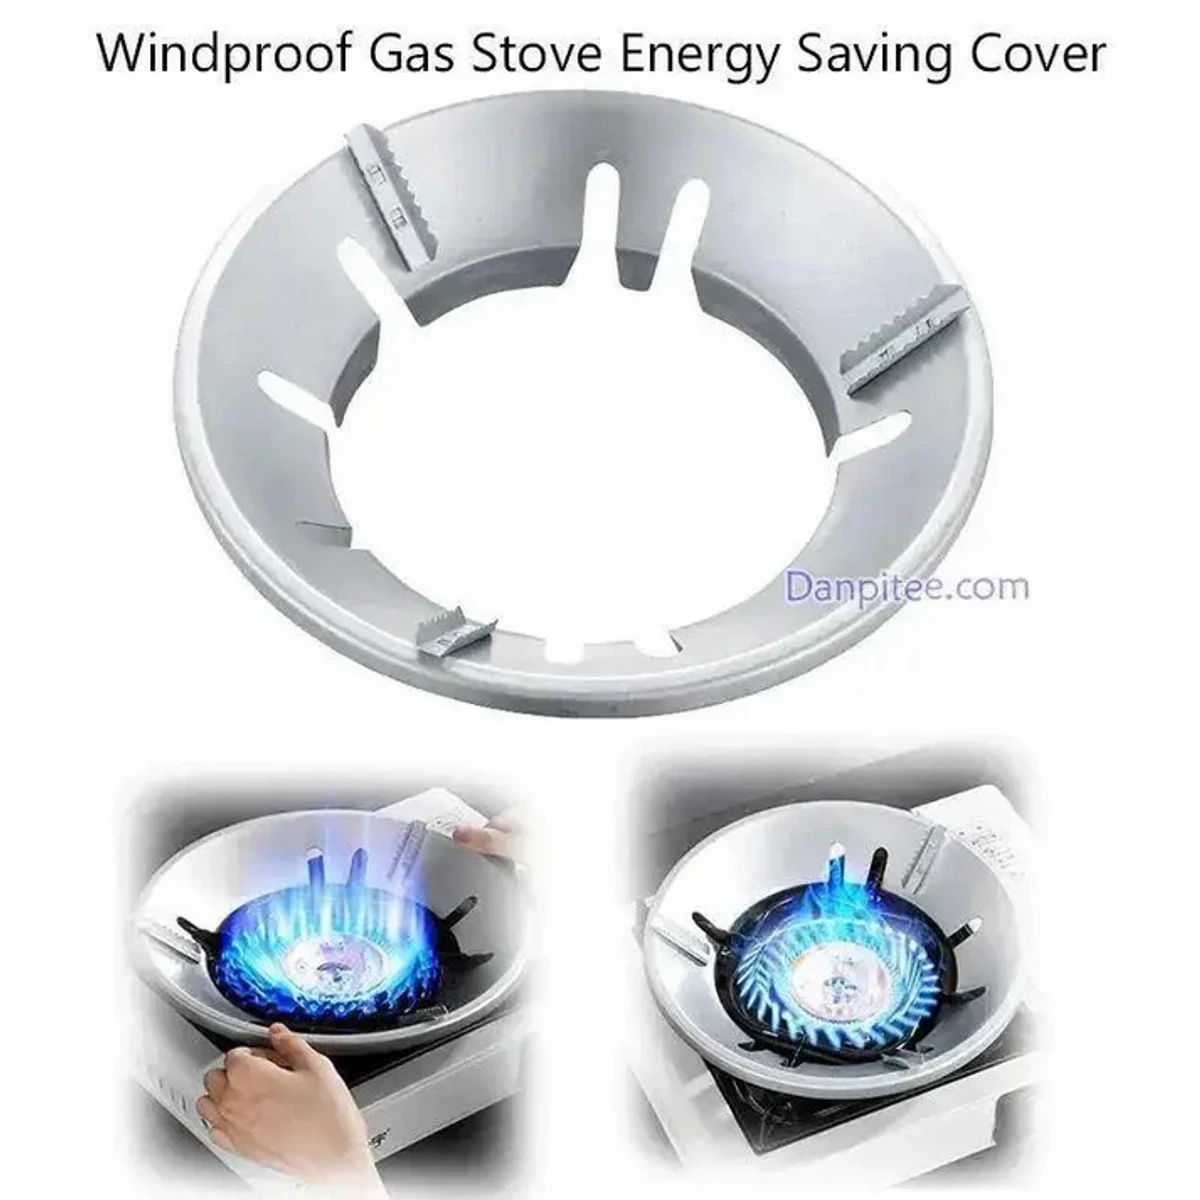 energy saving gase cover